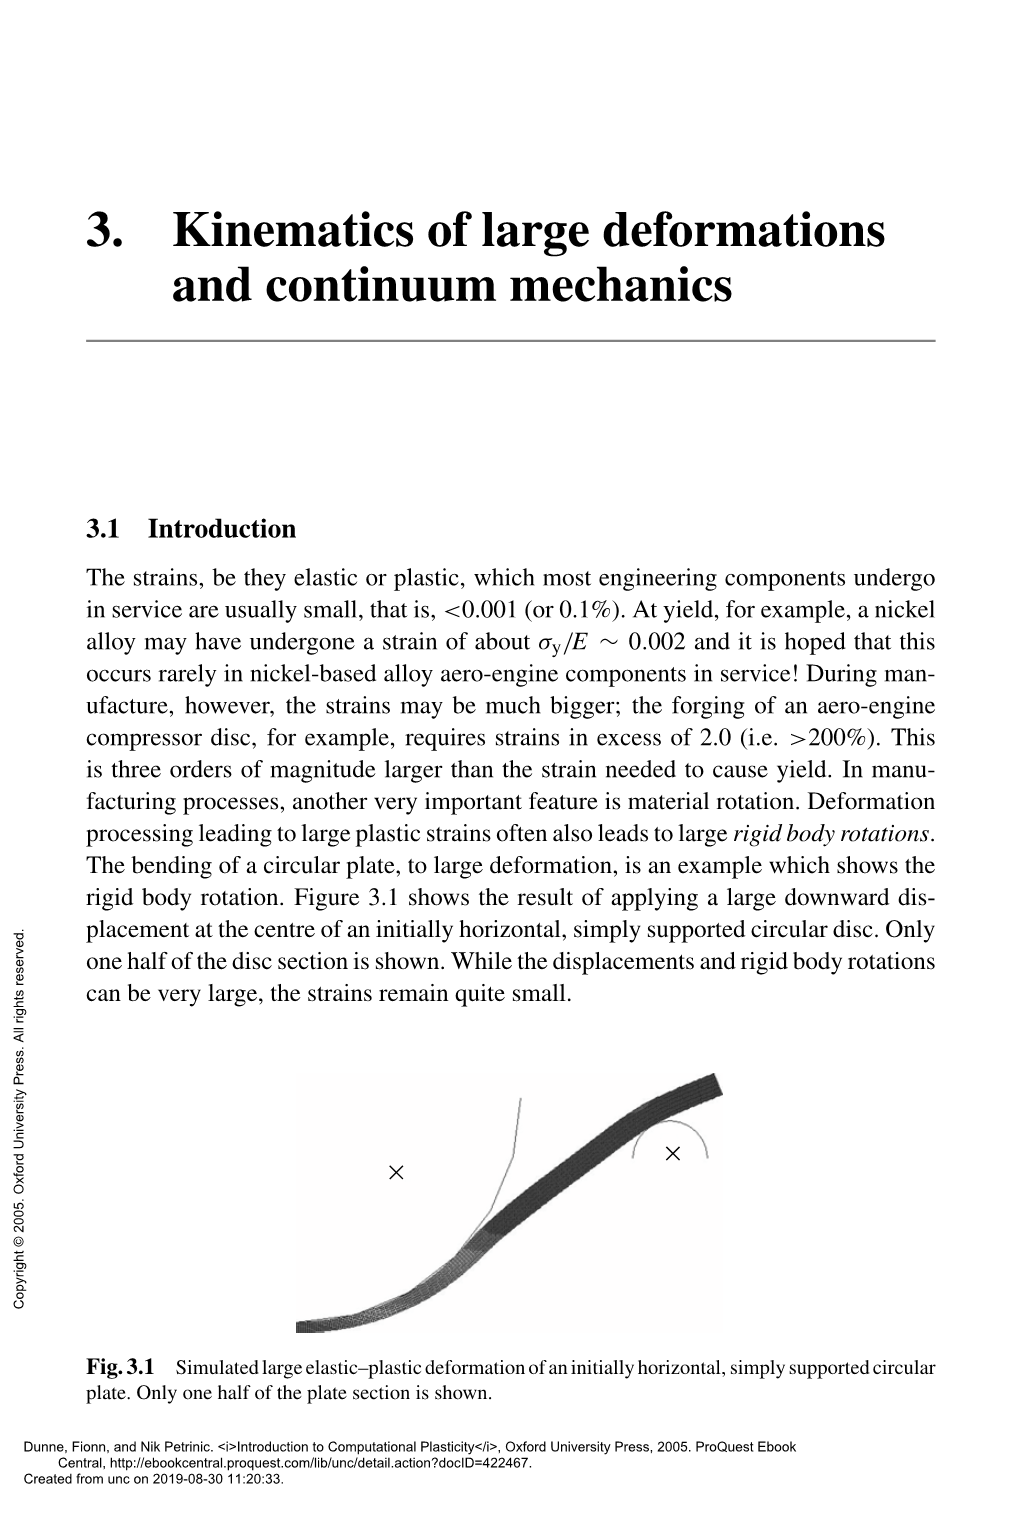 3. Kinematics of Large Deformations and Continuum Mechanics